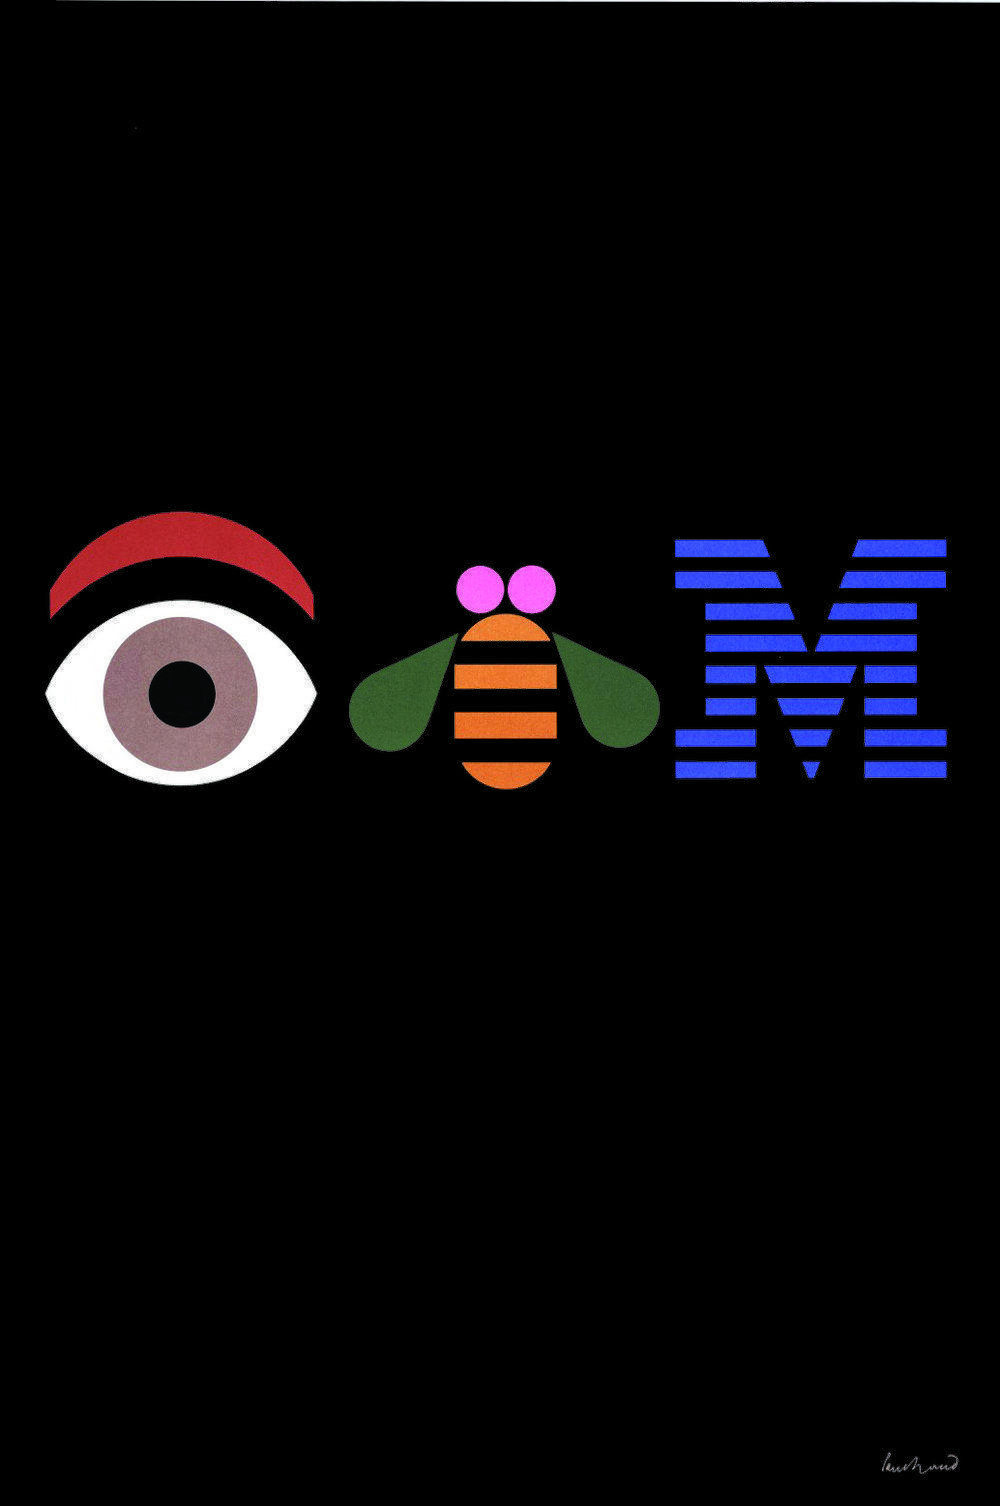 Paul Rand IBM Logo - About